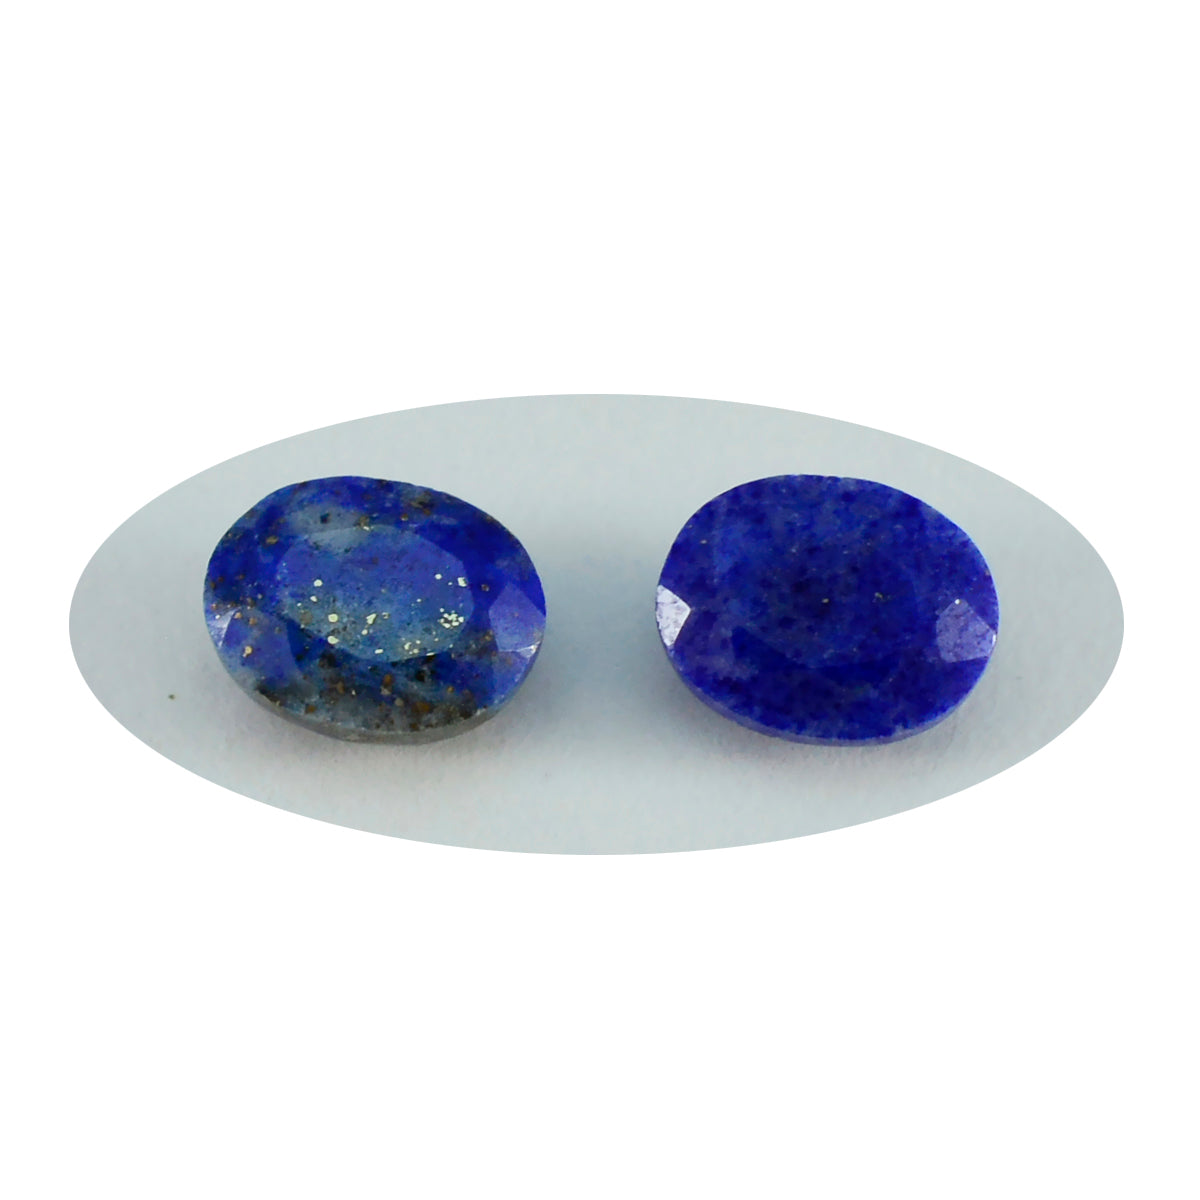 Riyogems 1PC Genuine Blue Lapis Lazuli Faceted 4x6 mm Oval Shape pretty Quality Gem